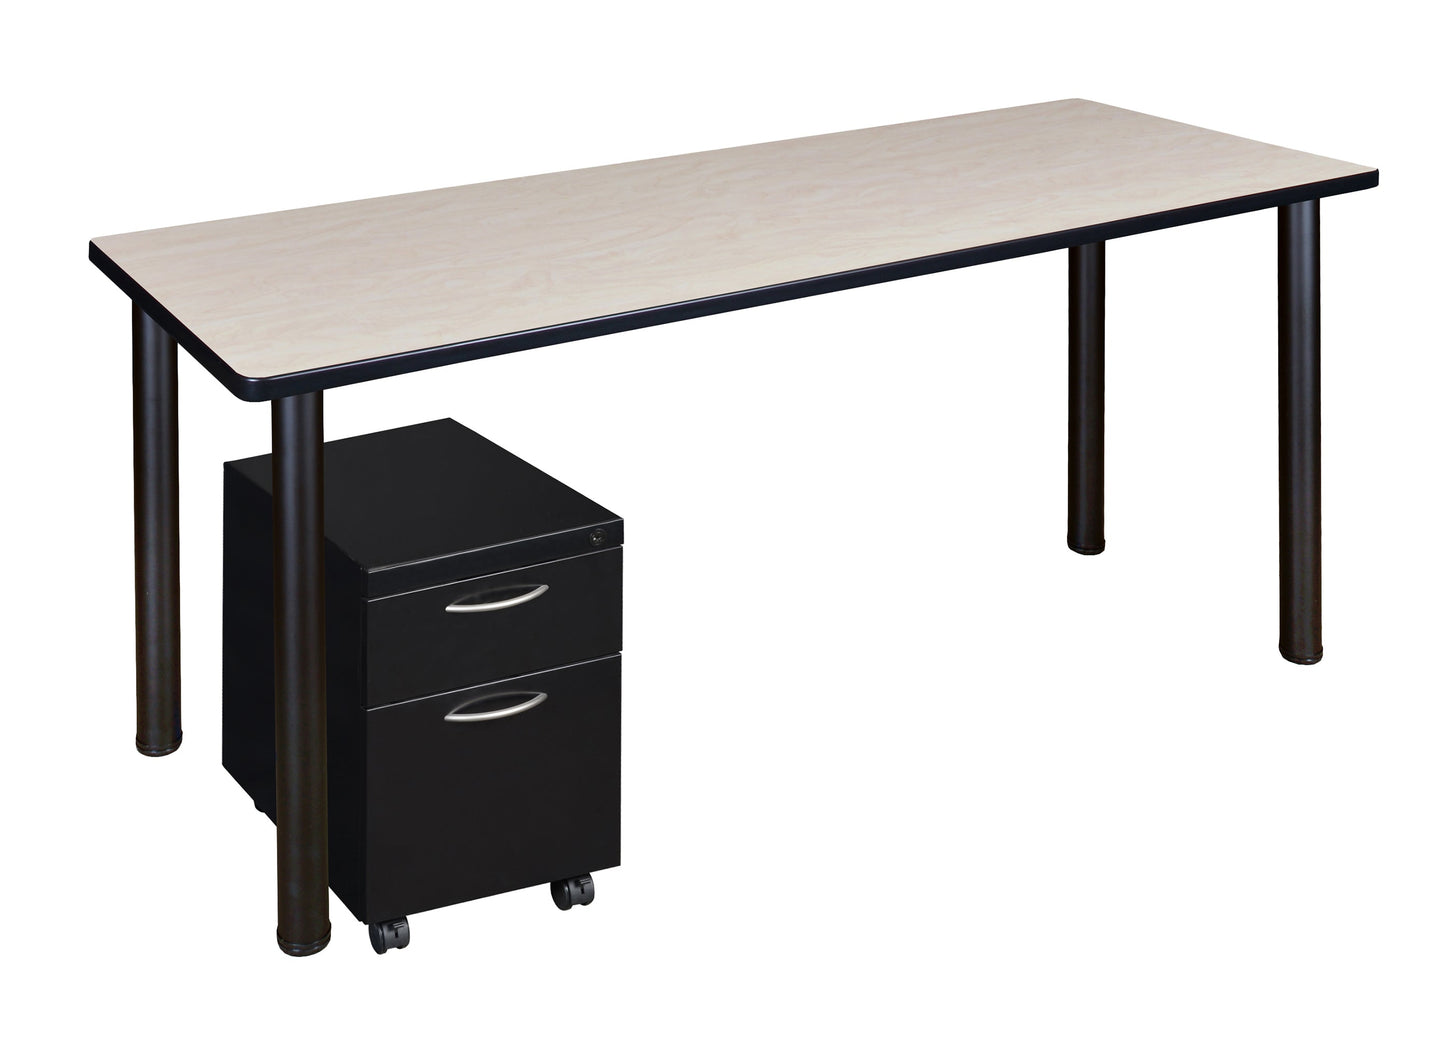 Regency Kee Office Desk Table with Mobile Pedestal Drawer (66"W x 24"D)